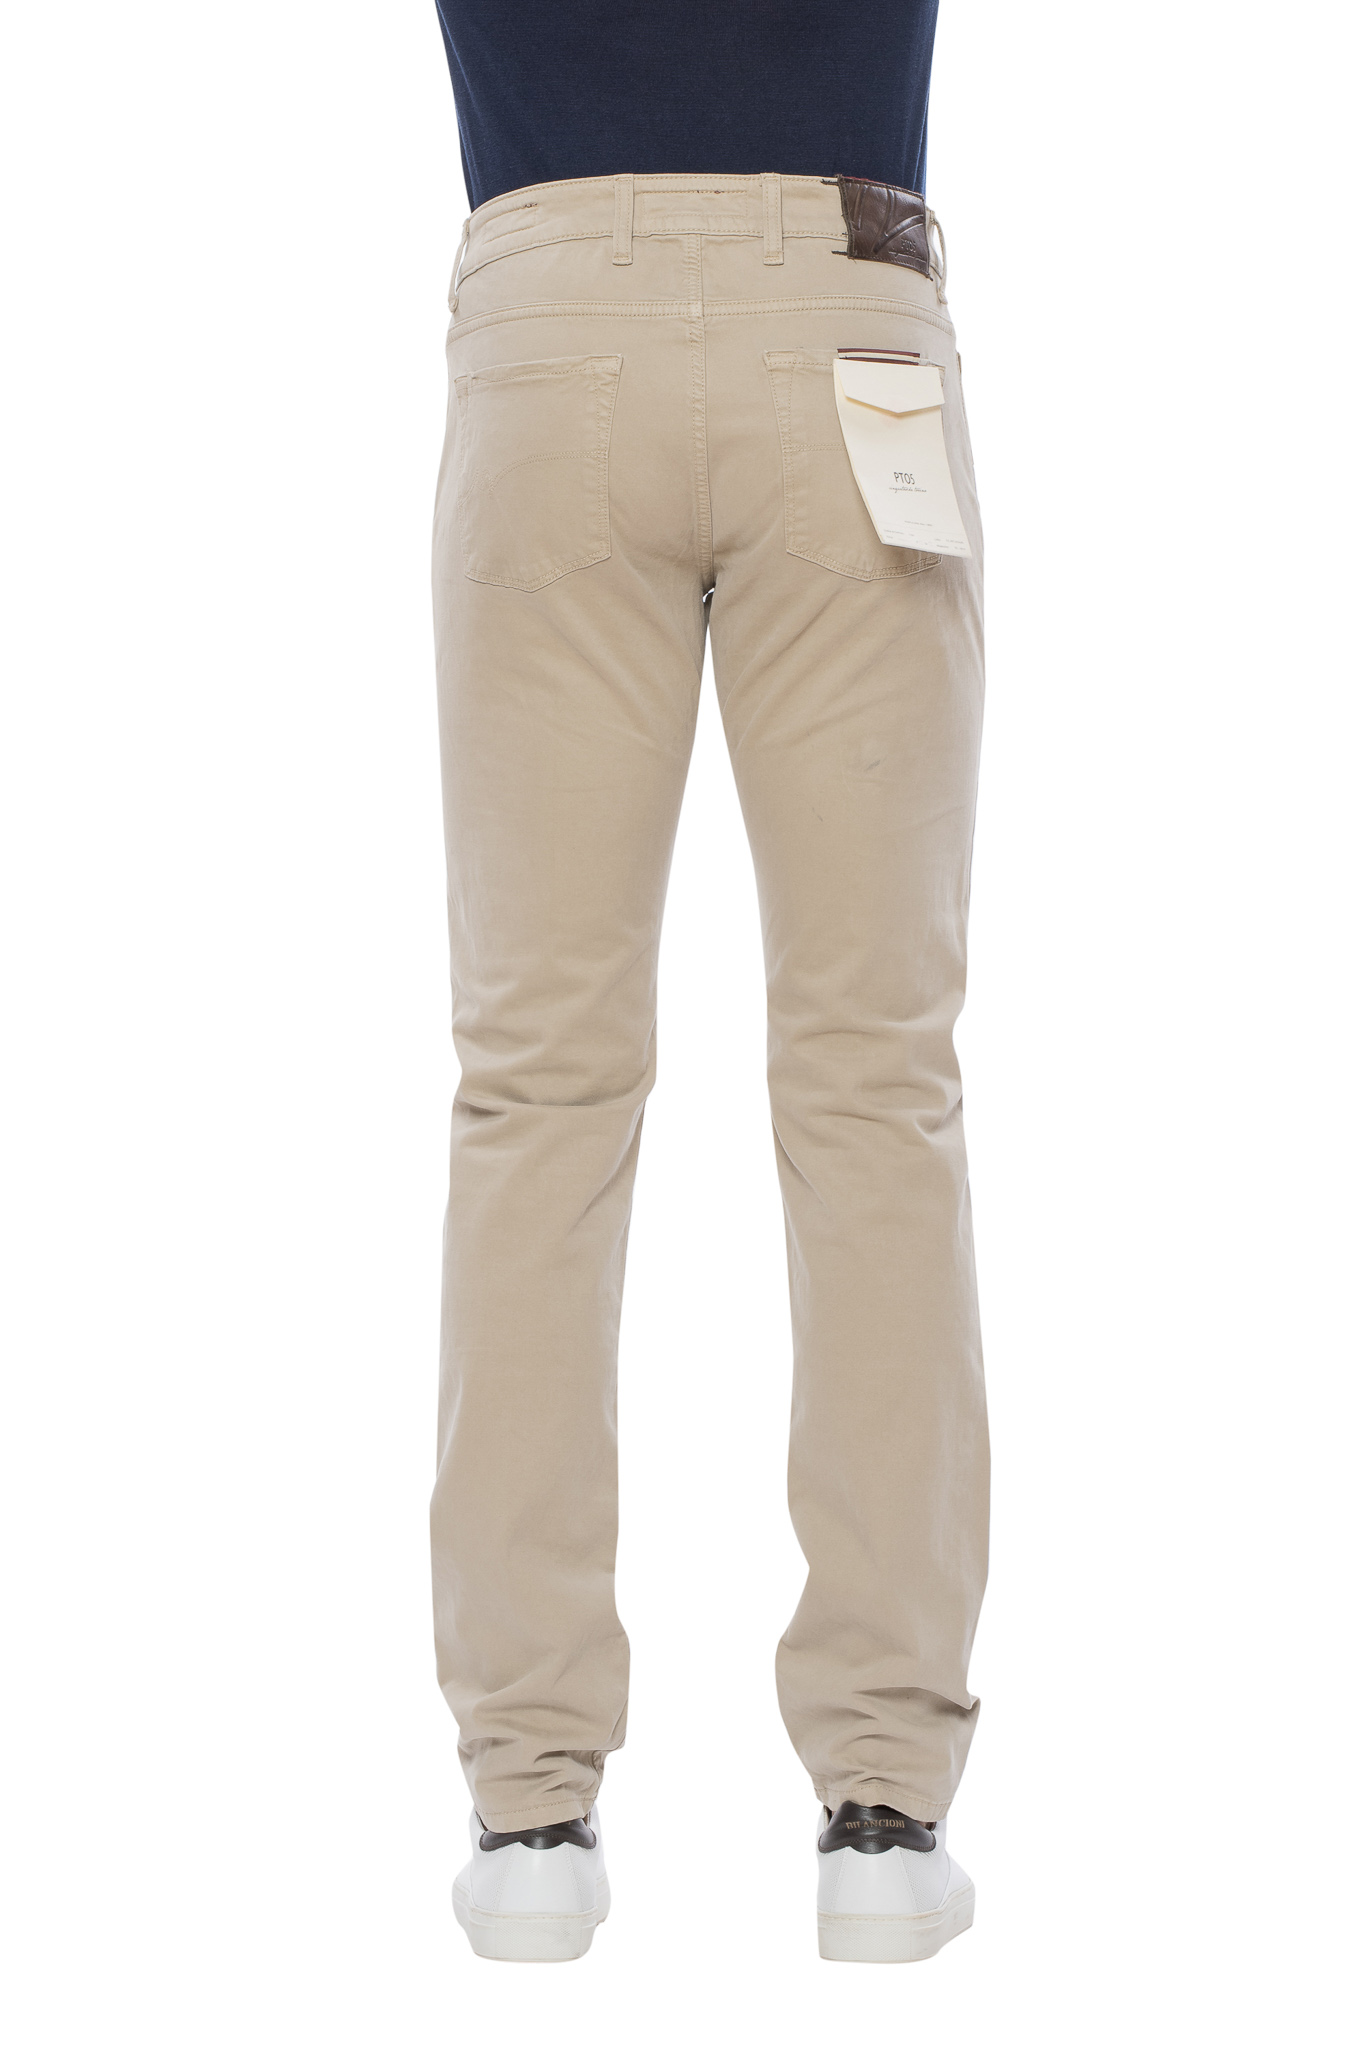 260$ Trousers Pants Jeans Beige Cotton Slim Fit 31 US / 47 EU - Luxgentleman